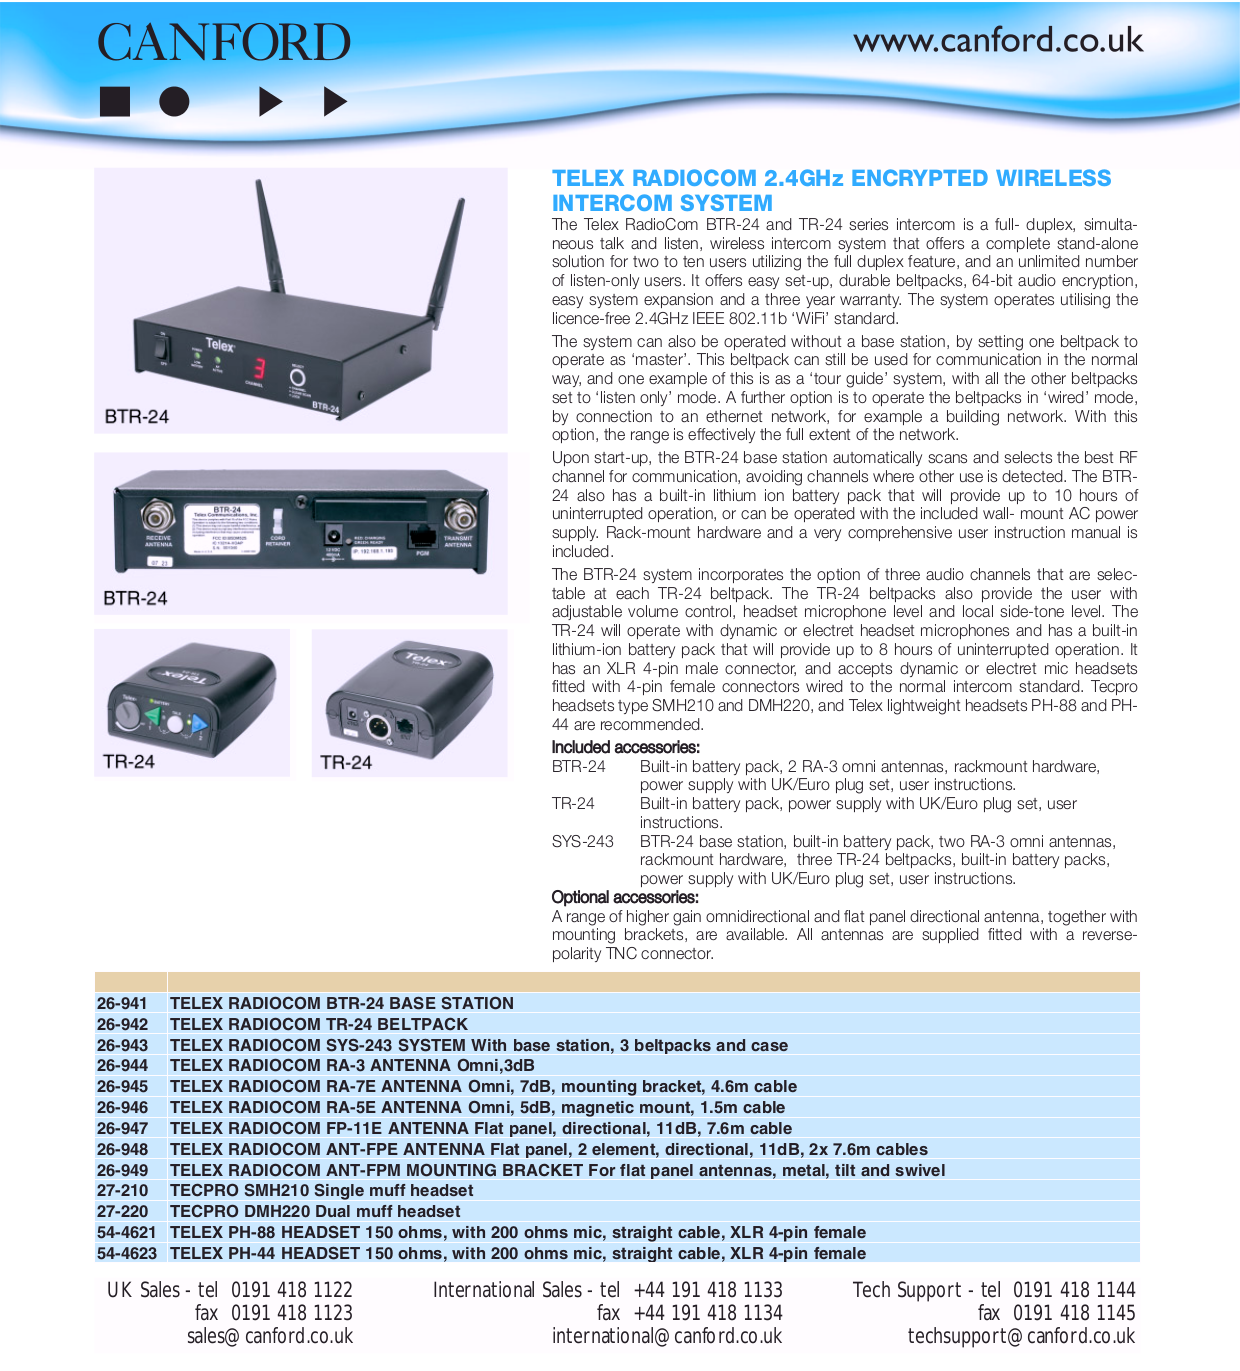 pdf for Telex Other BTR-24 Intercom System manual